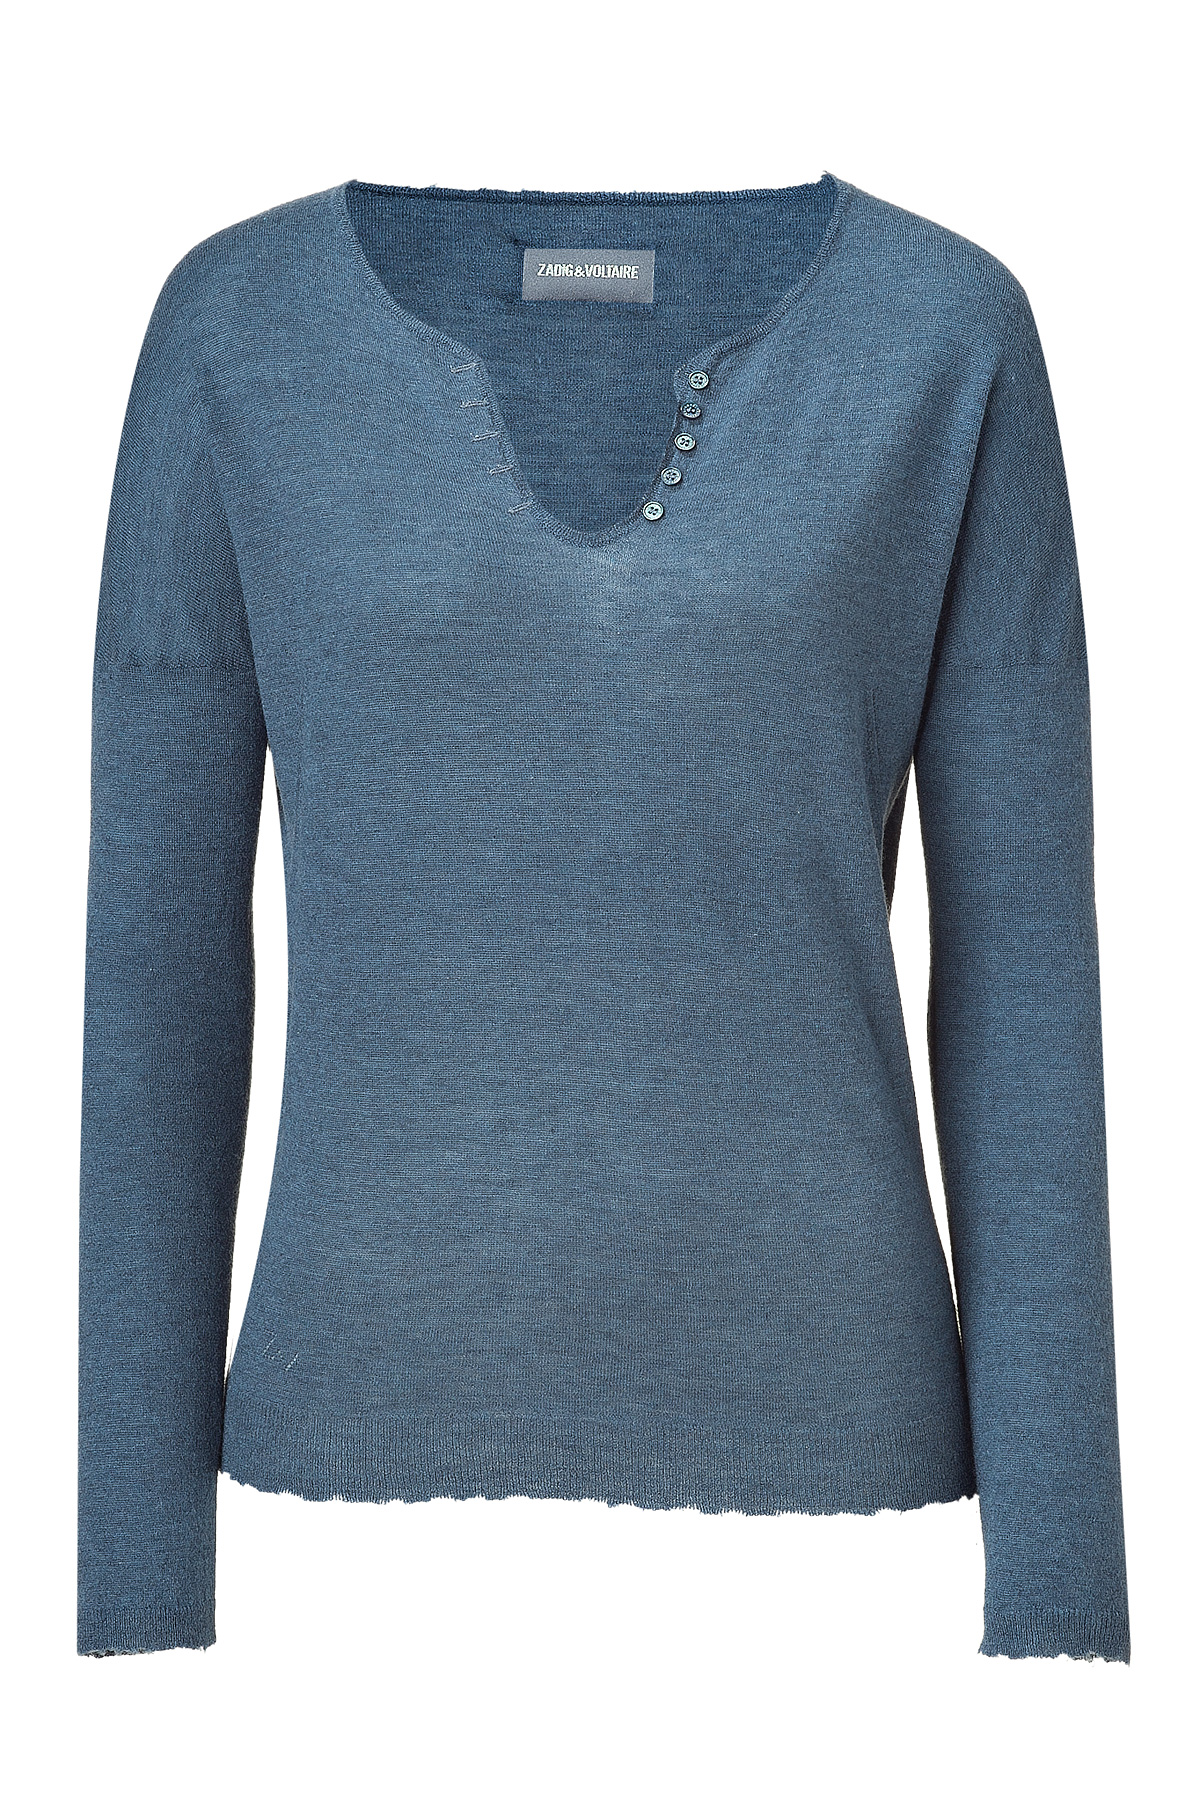 Zadig & Voltaire Blue Mélange Cashmere Celsa Sweater in Blue | Lyst